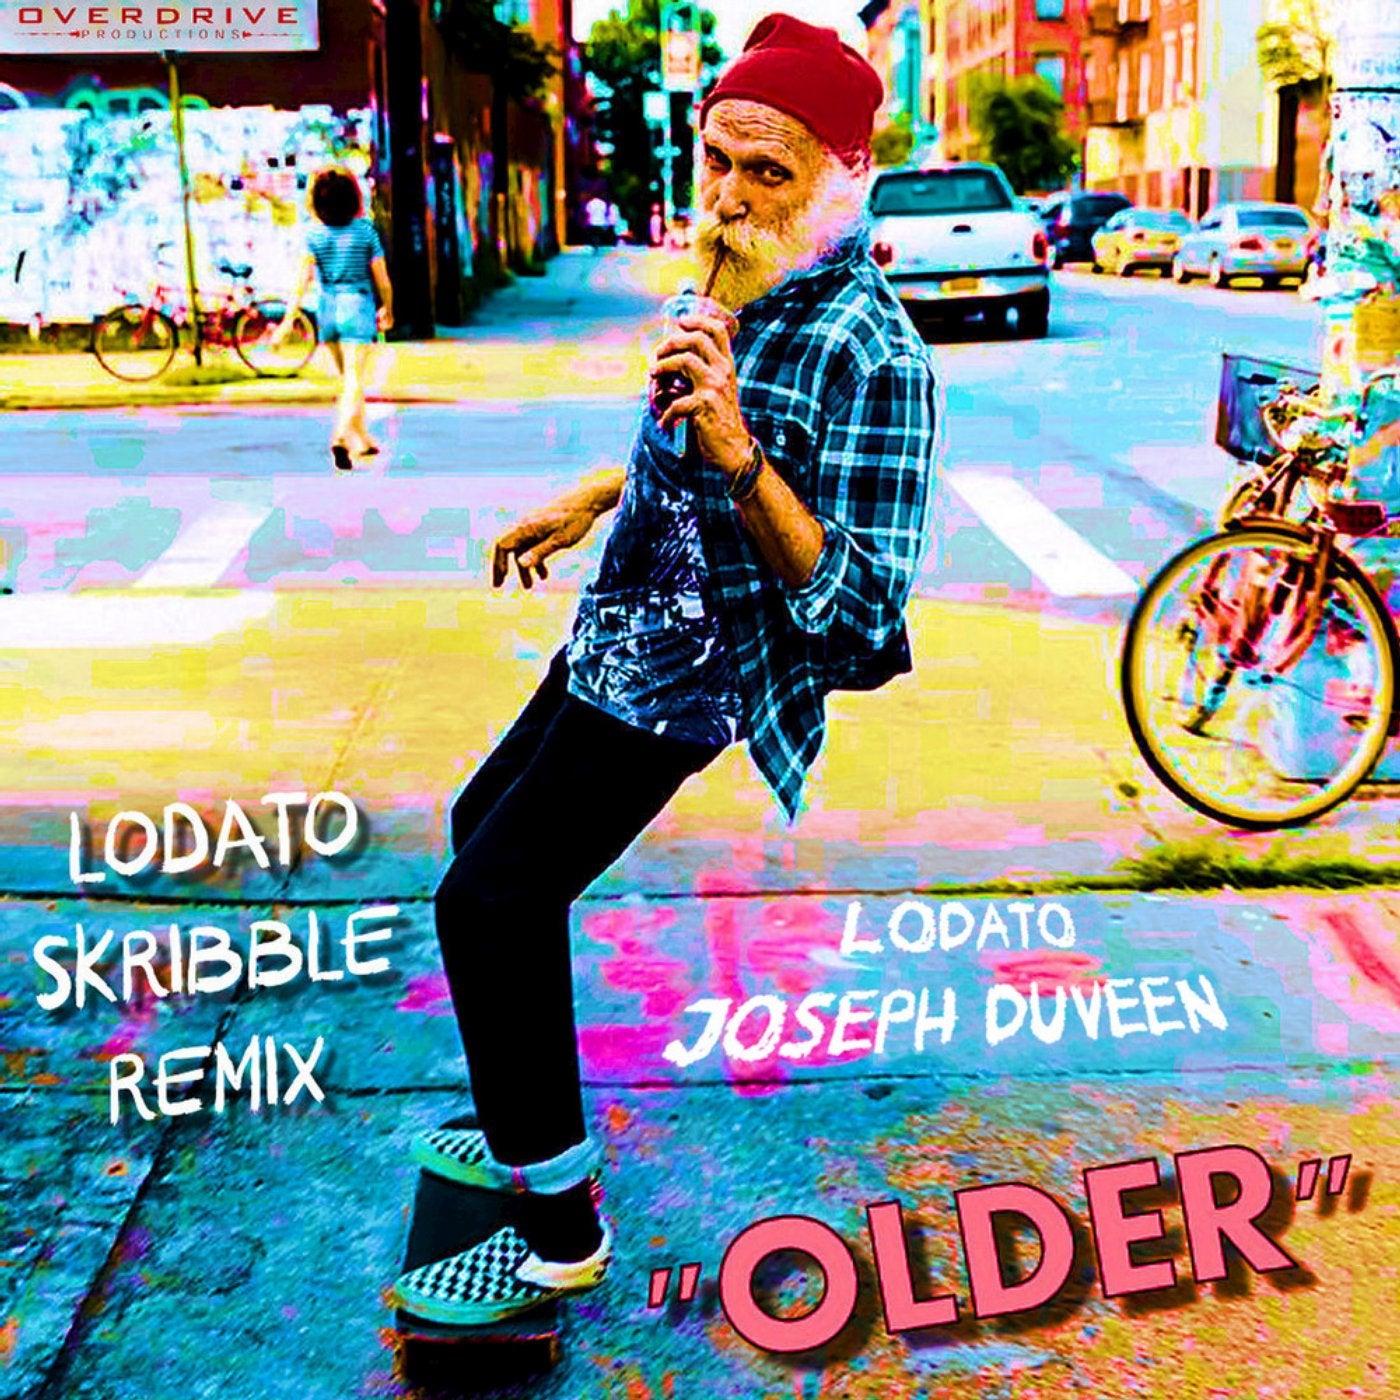 Older (Lodato & Skribble Remix)